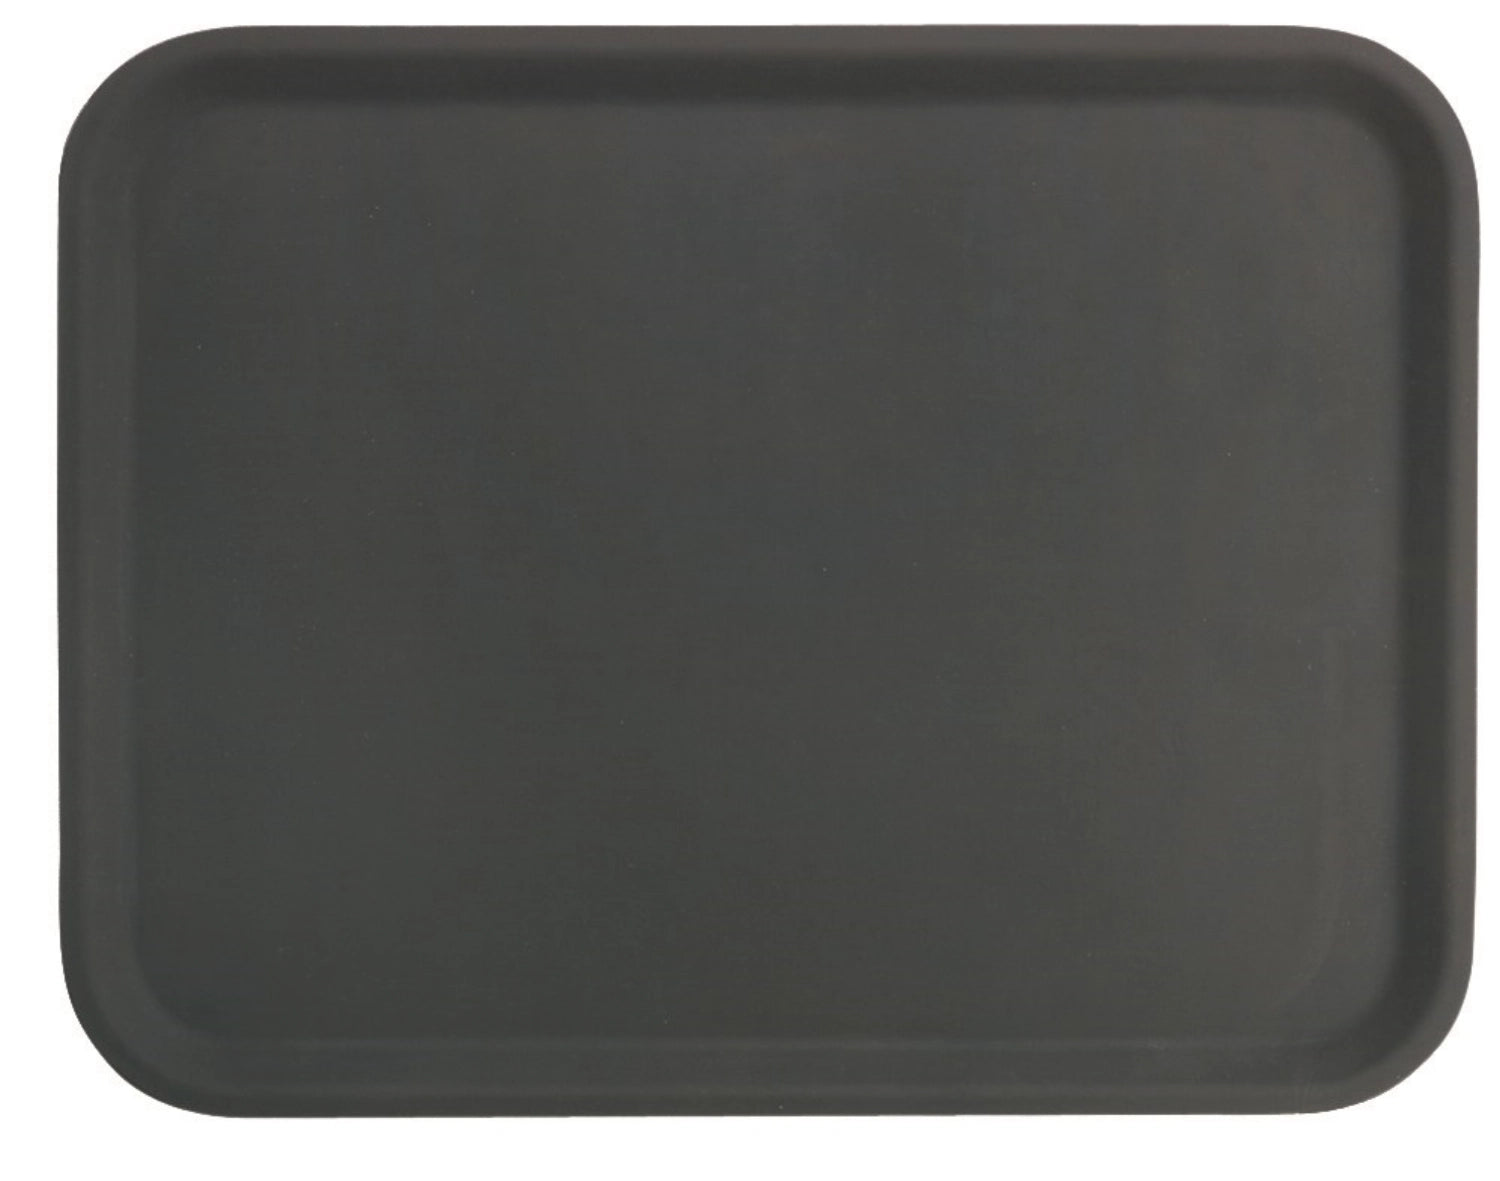 Tablett antirutschbeschichtet schwarz GN 1/2 26.5x32.5cm - KAQTU Design